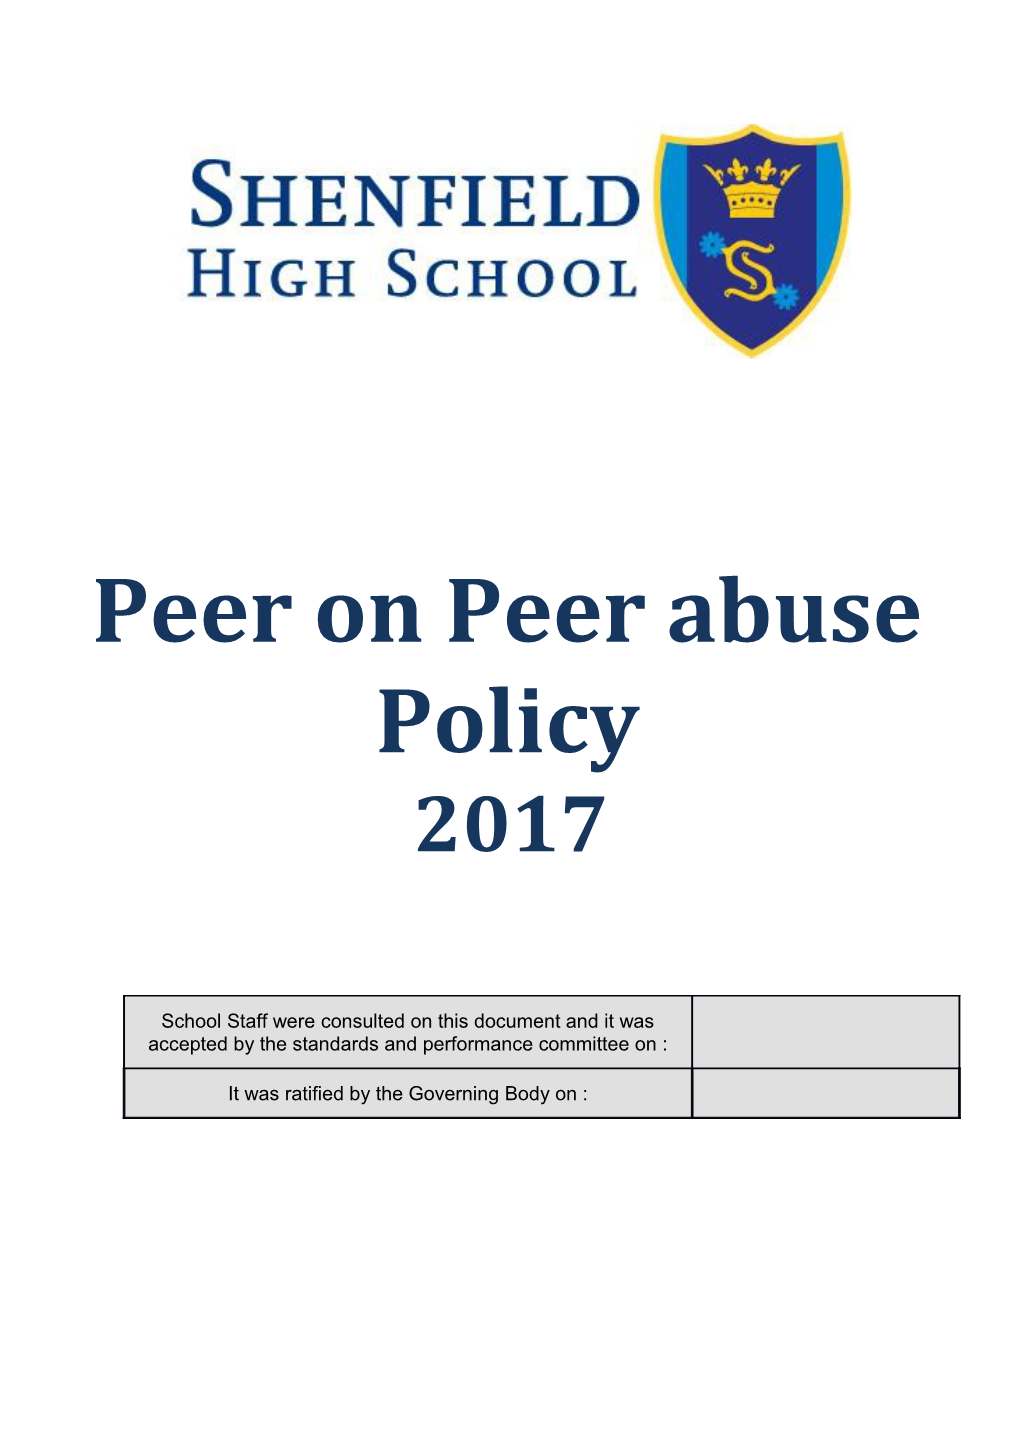 Peer on Peer Abuse Policy